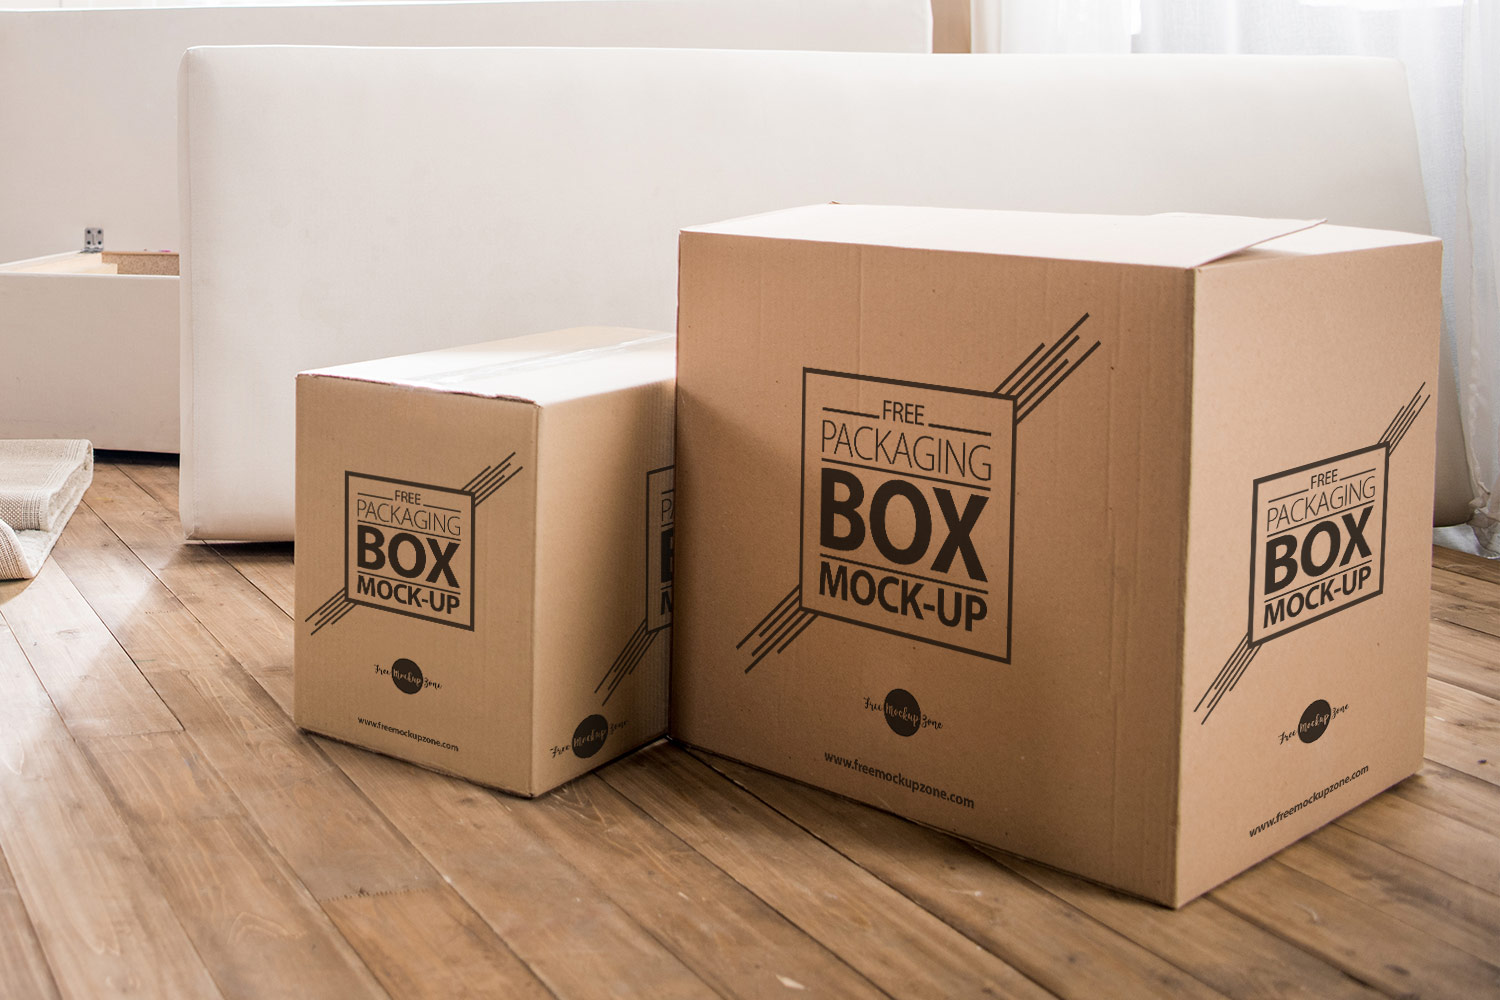 Download Packaging Box on Wooden Floor Free PSD Mockup | Free Mockup